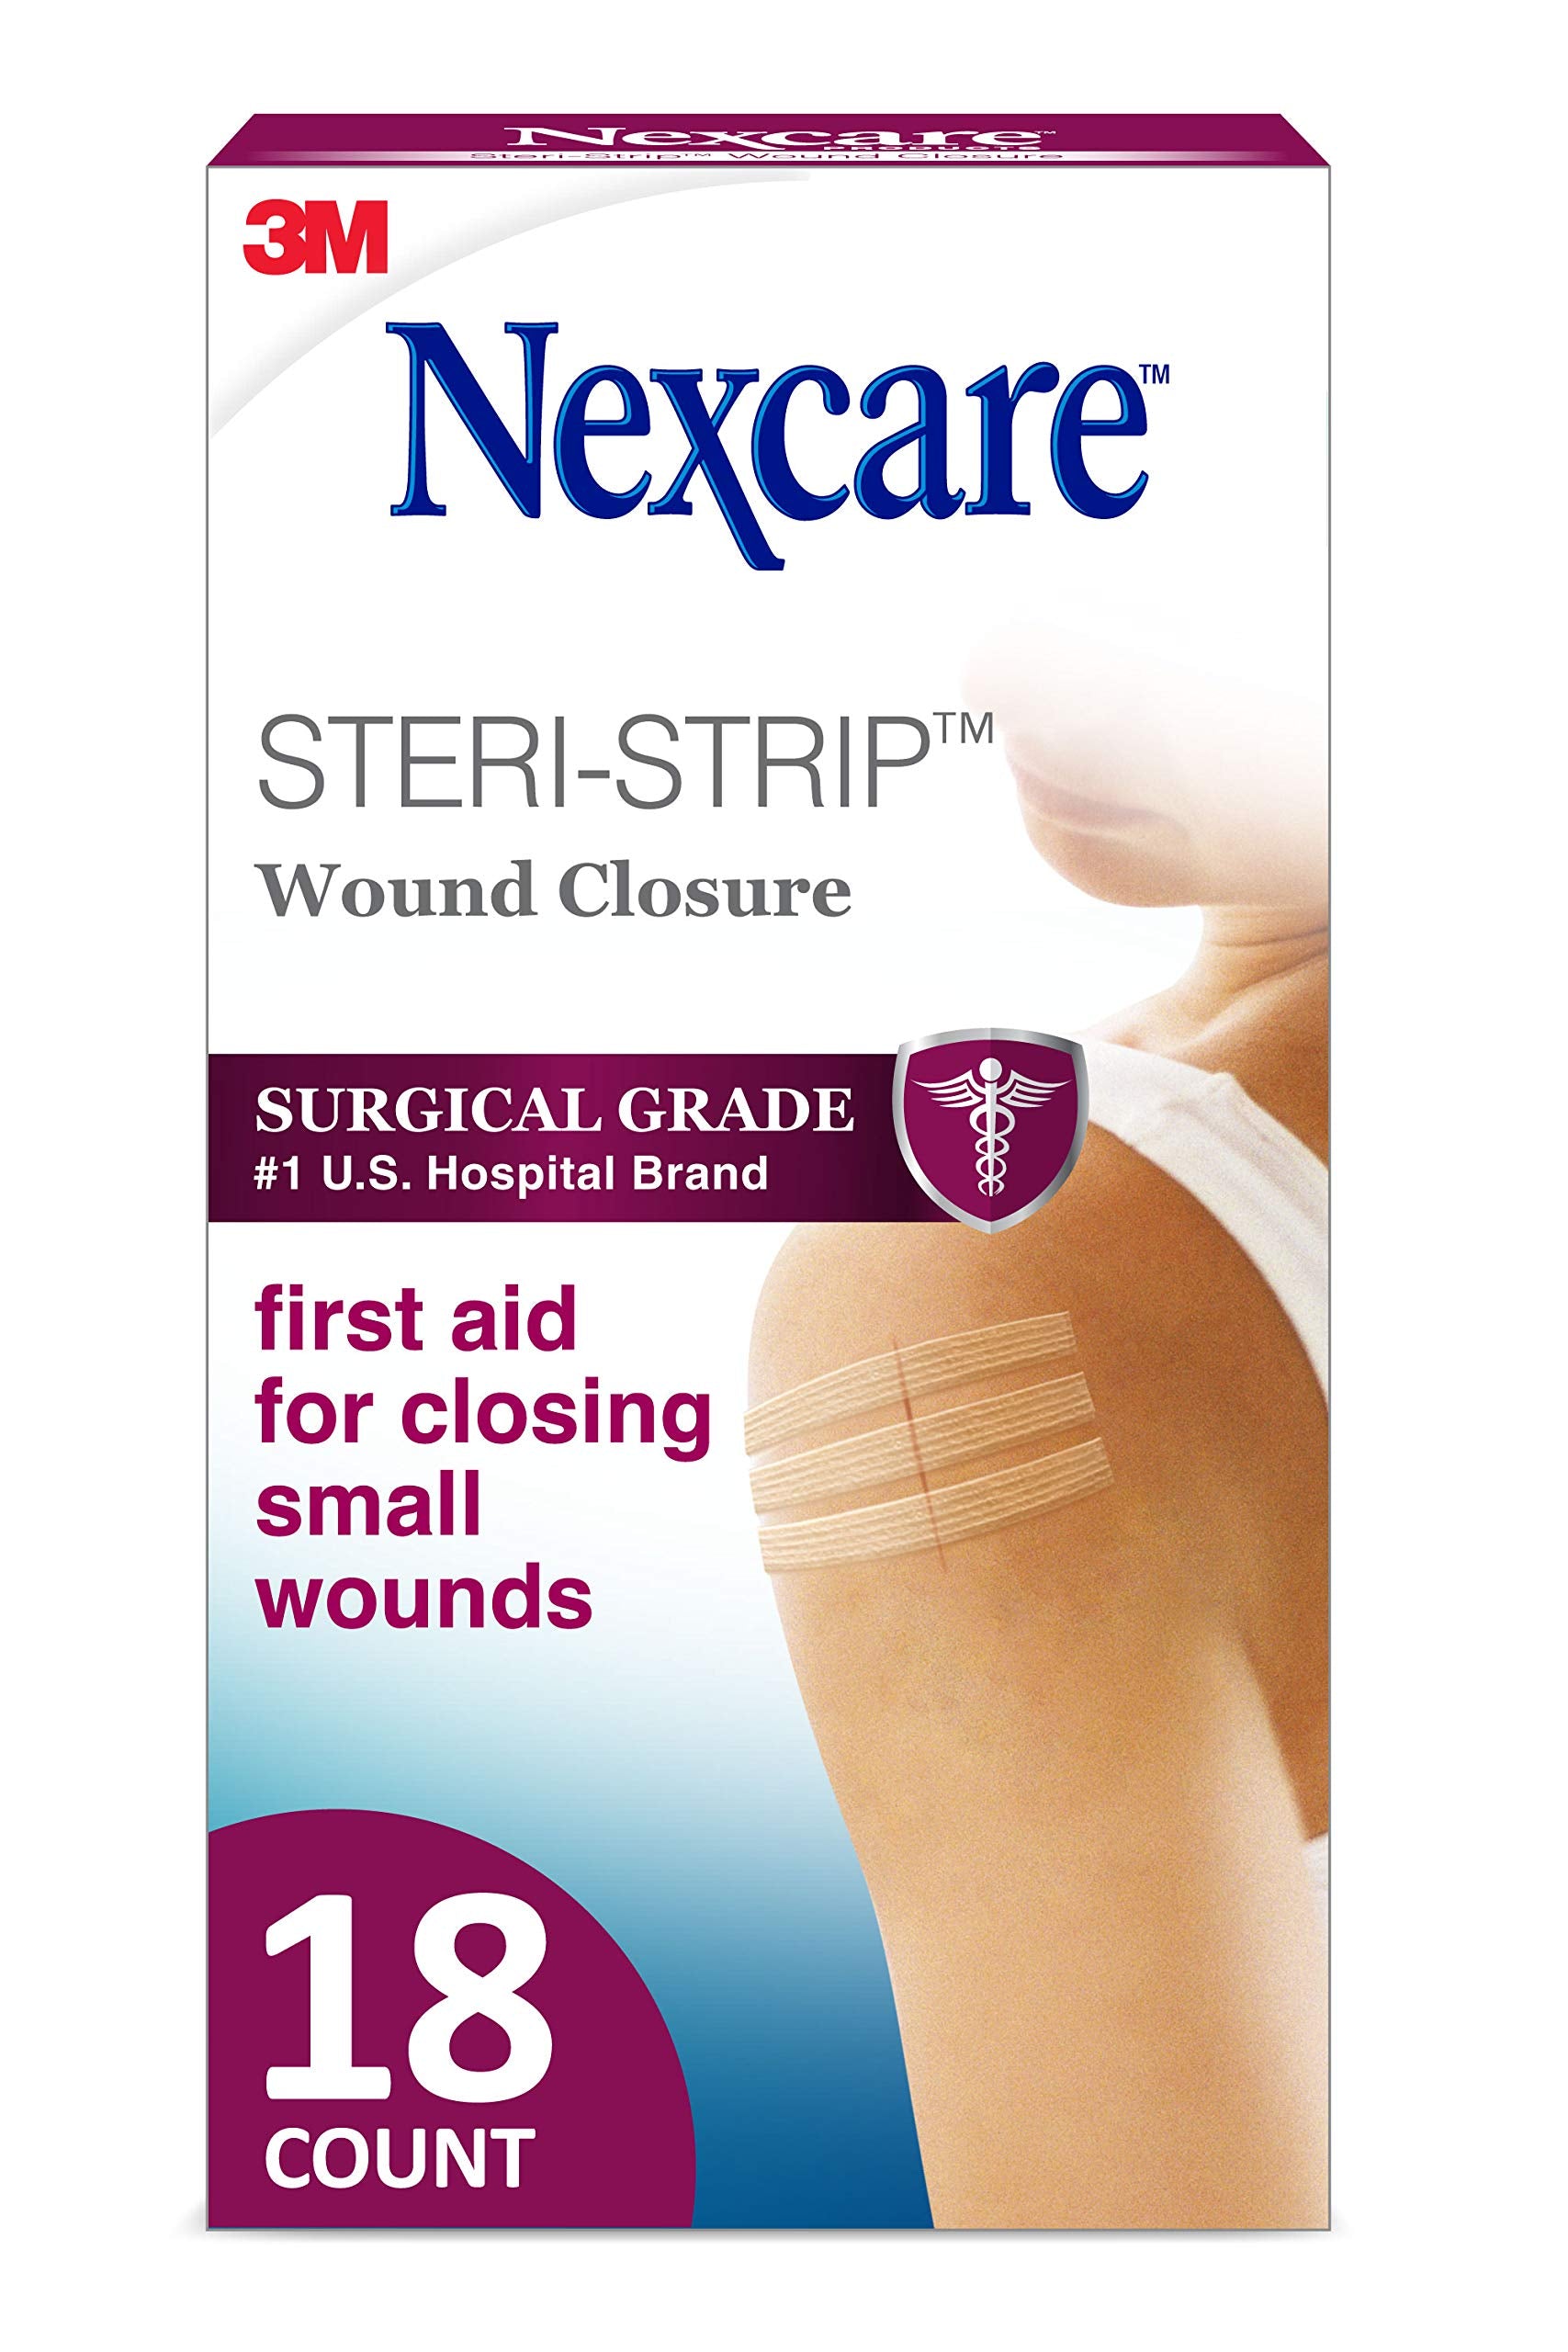 Nexcare Steri-Strip Skin Closure, Hypoallergenic, 18-Count